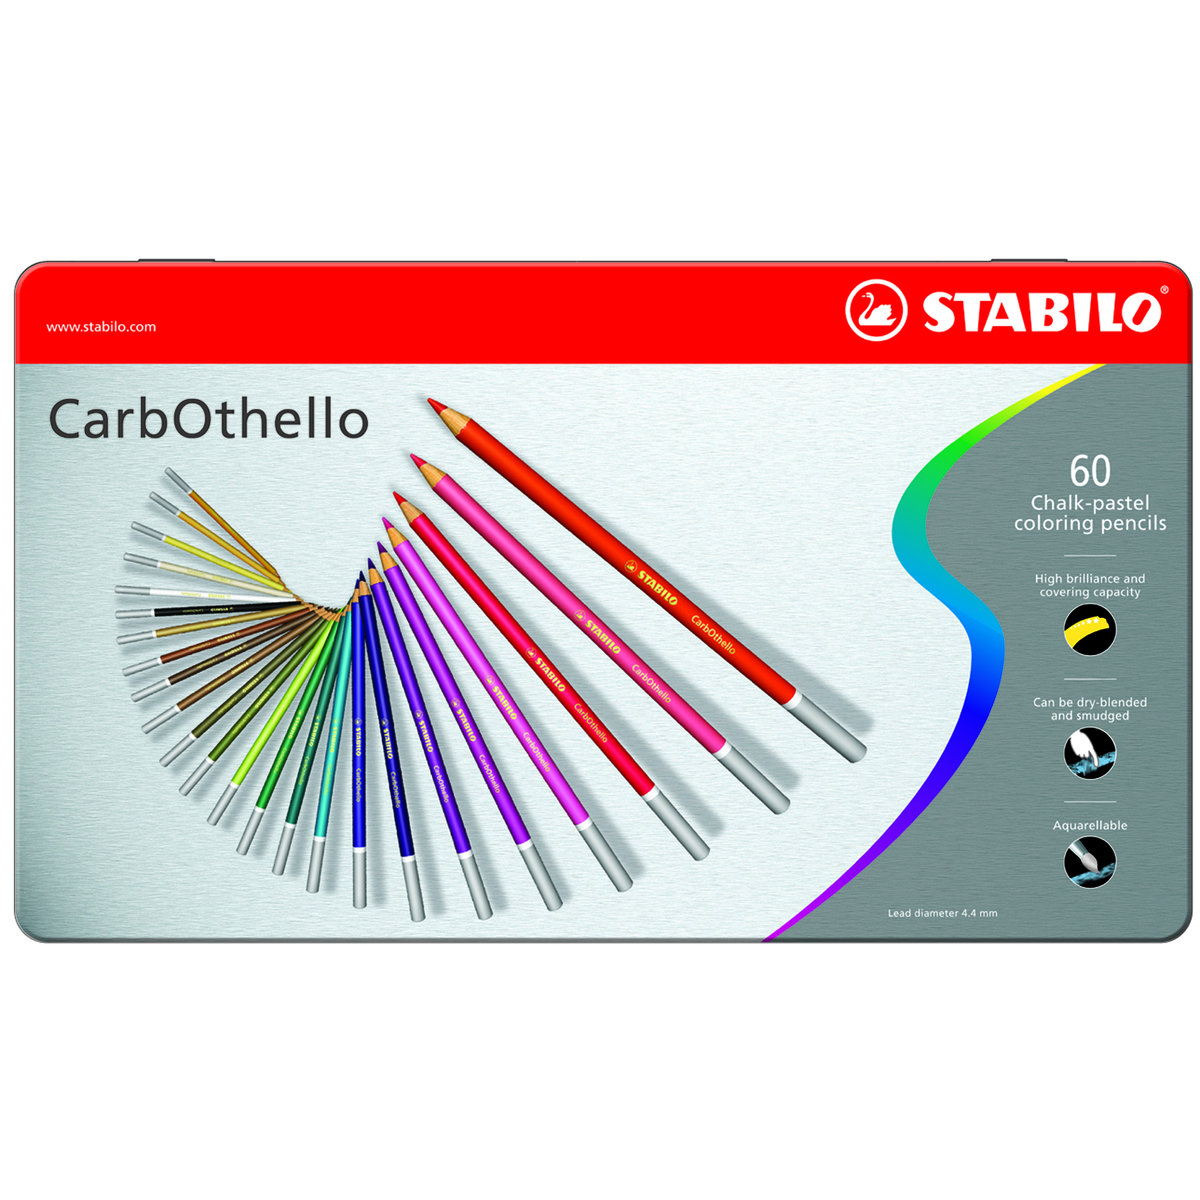 STABILO Carbothello set of 60's